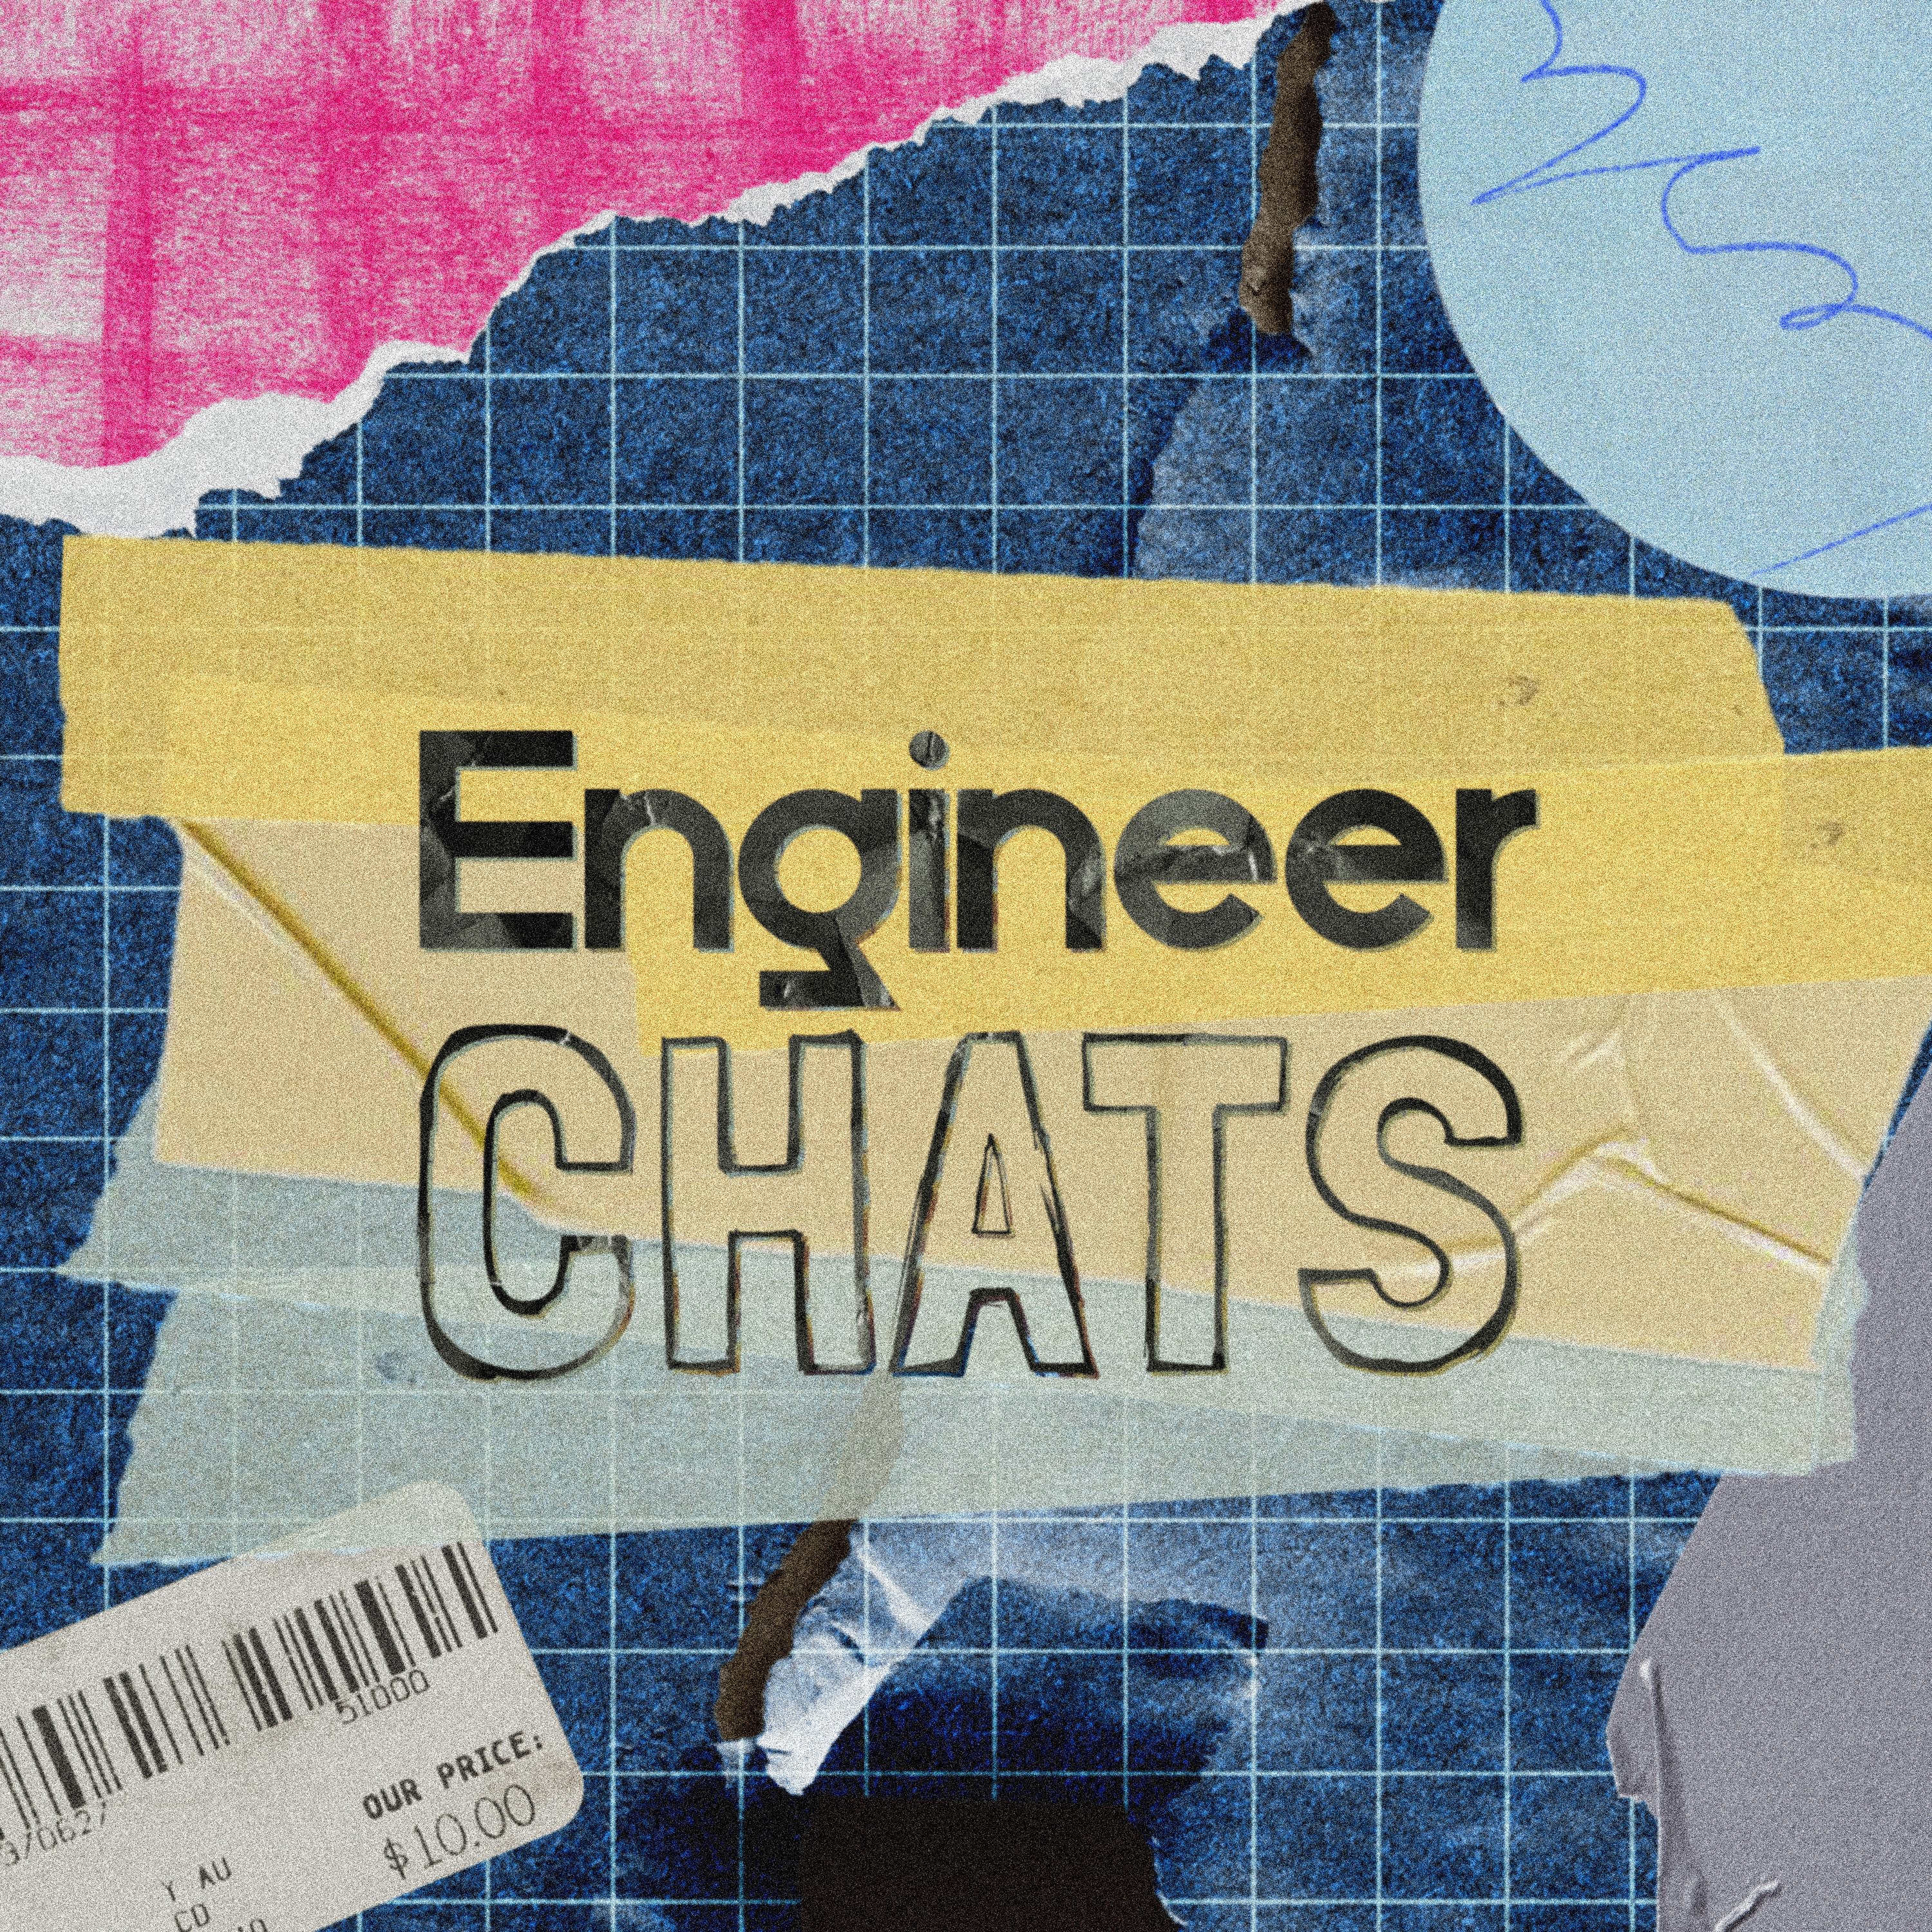 Intercom presents Engineer Chats